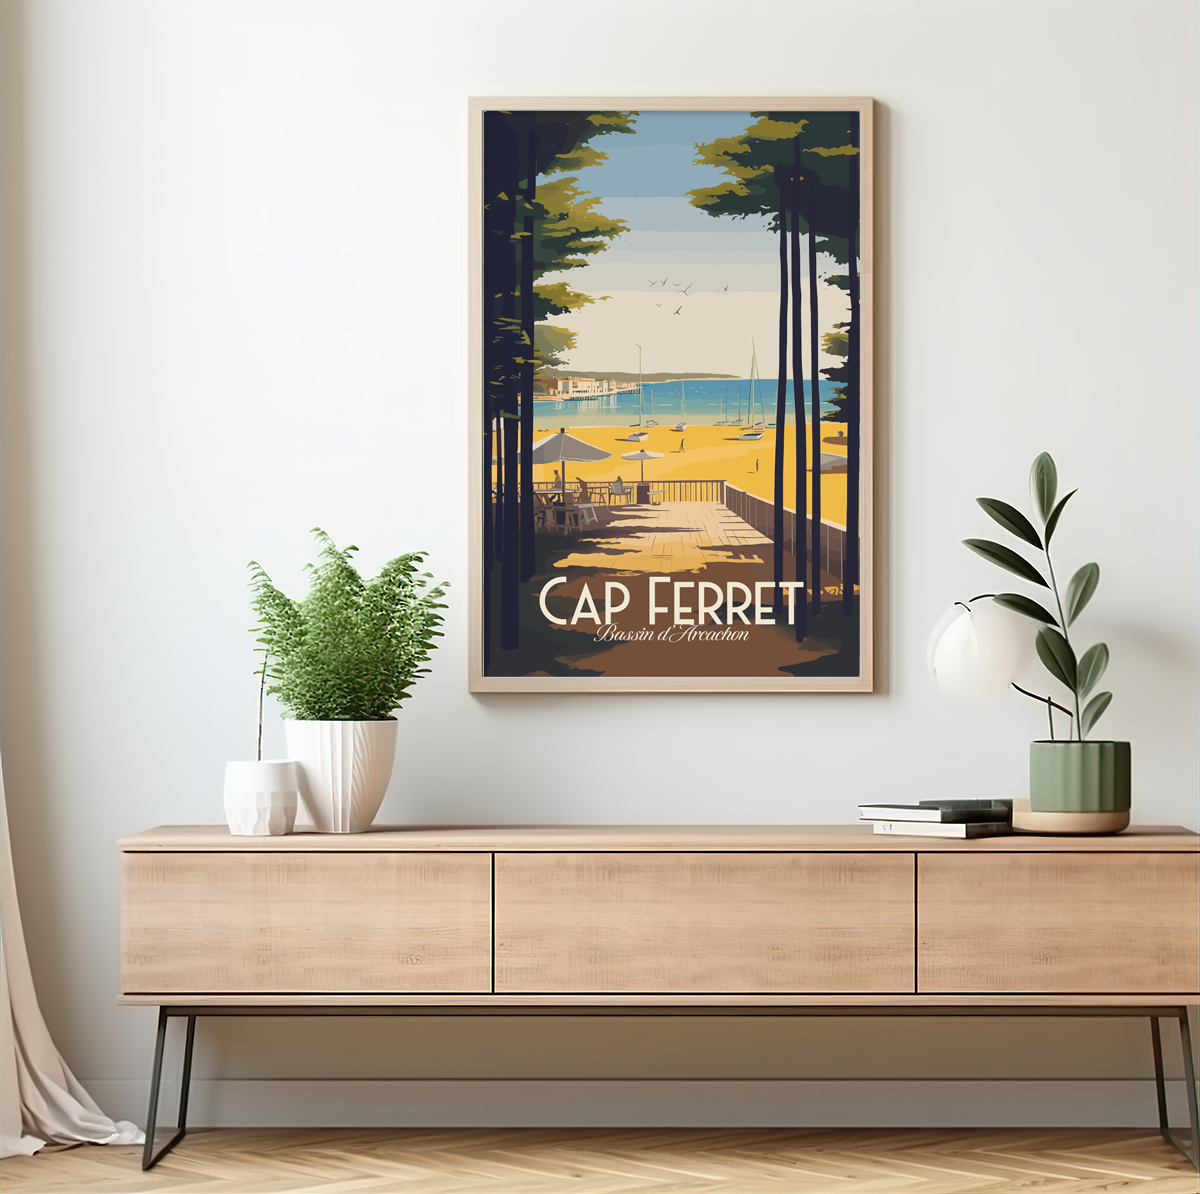 Cap Ferret - Plage poster by bon voyage design